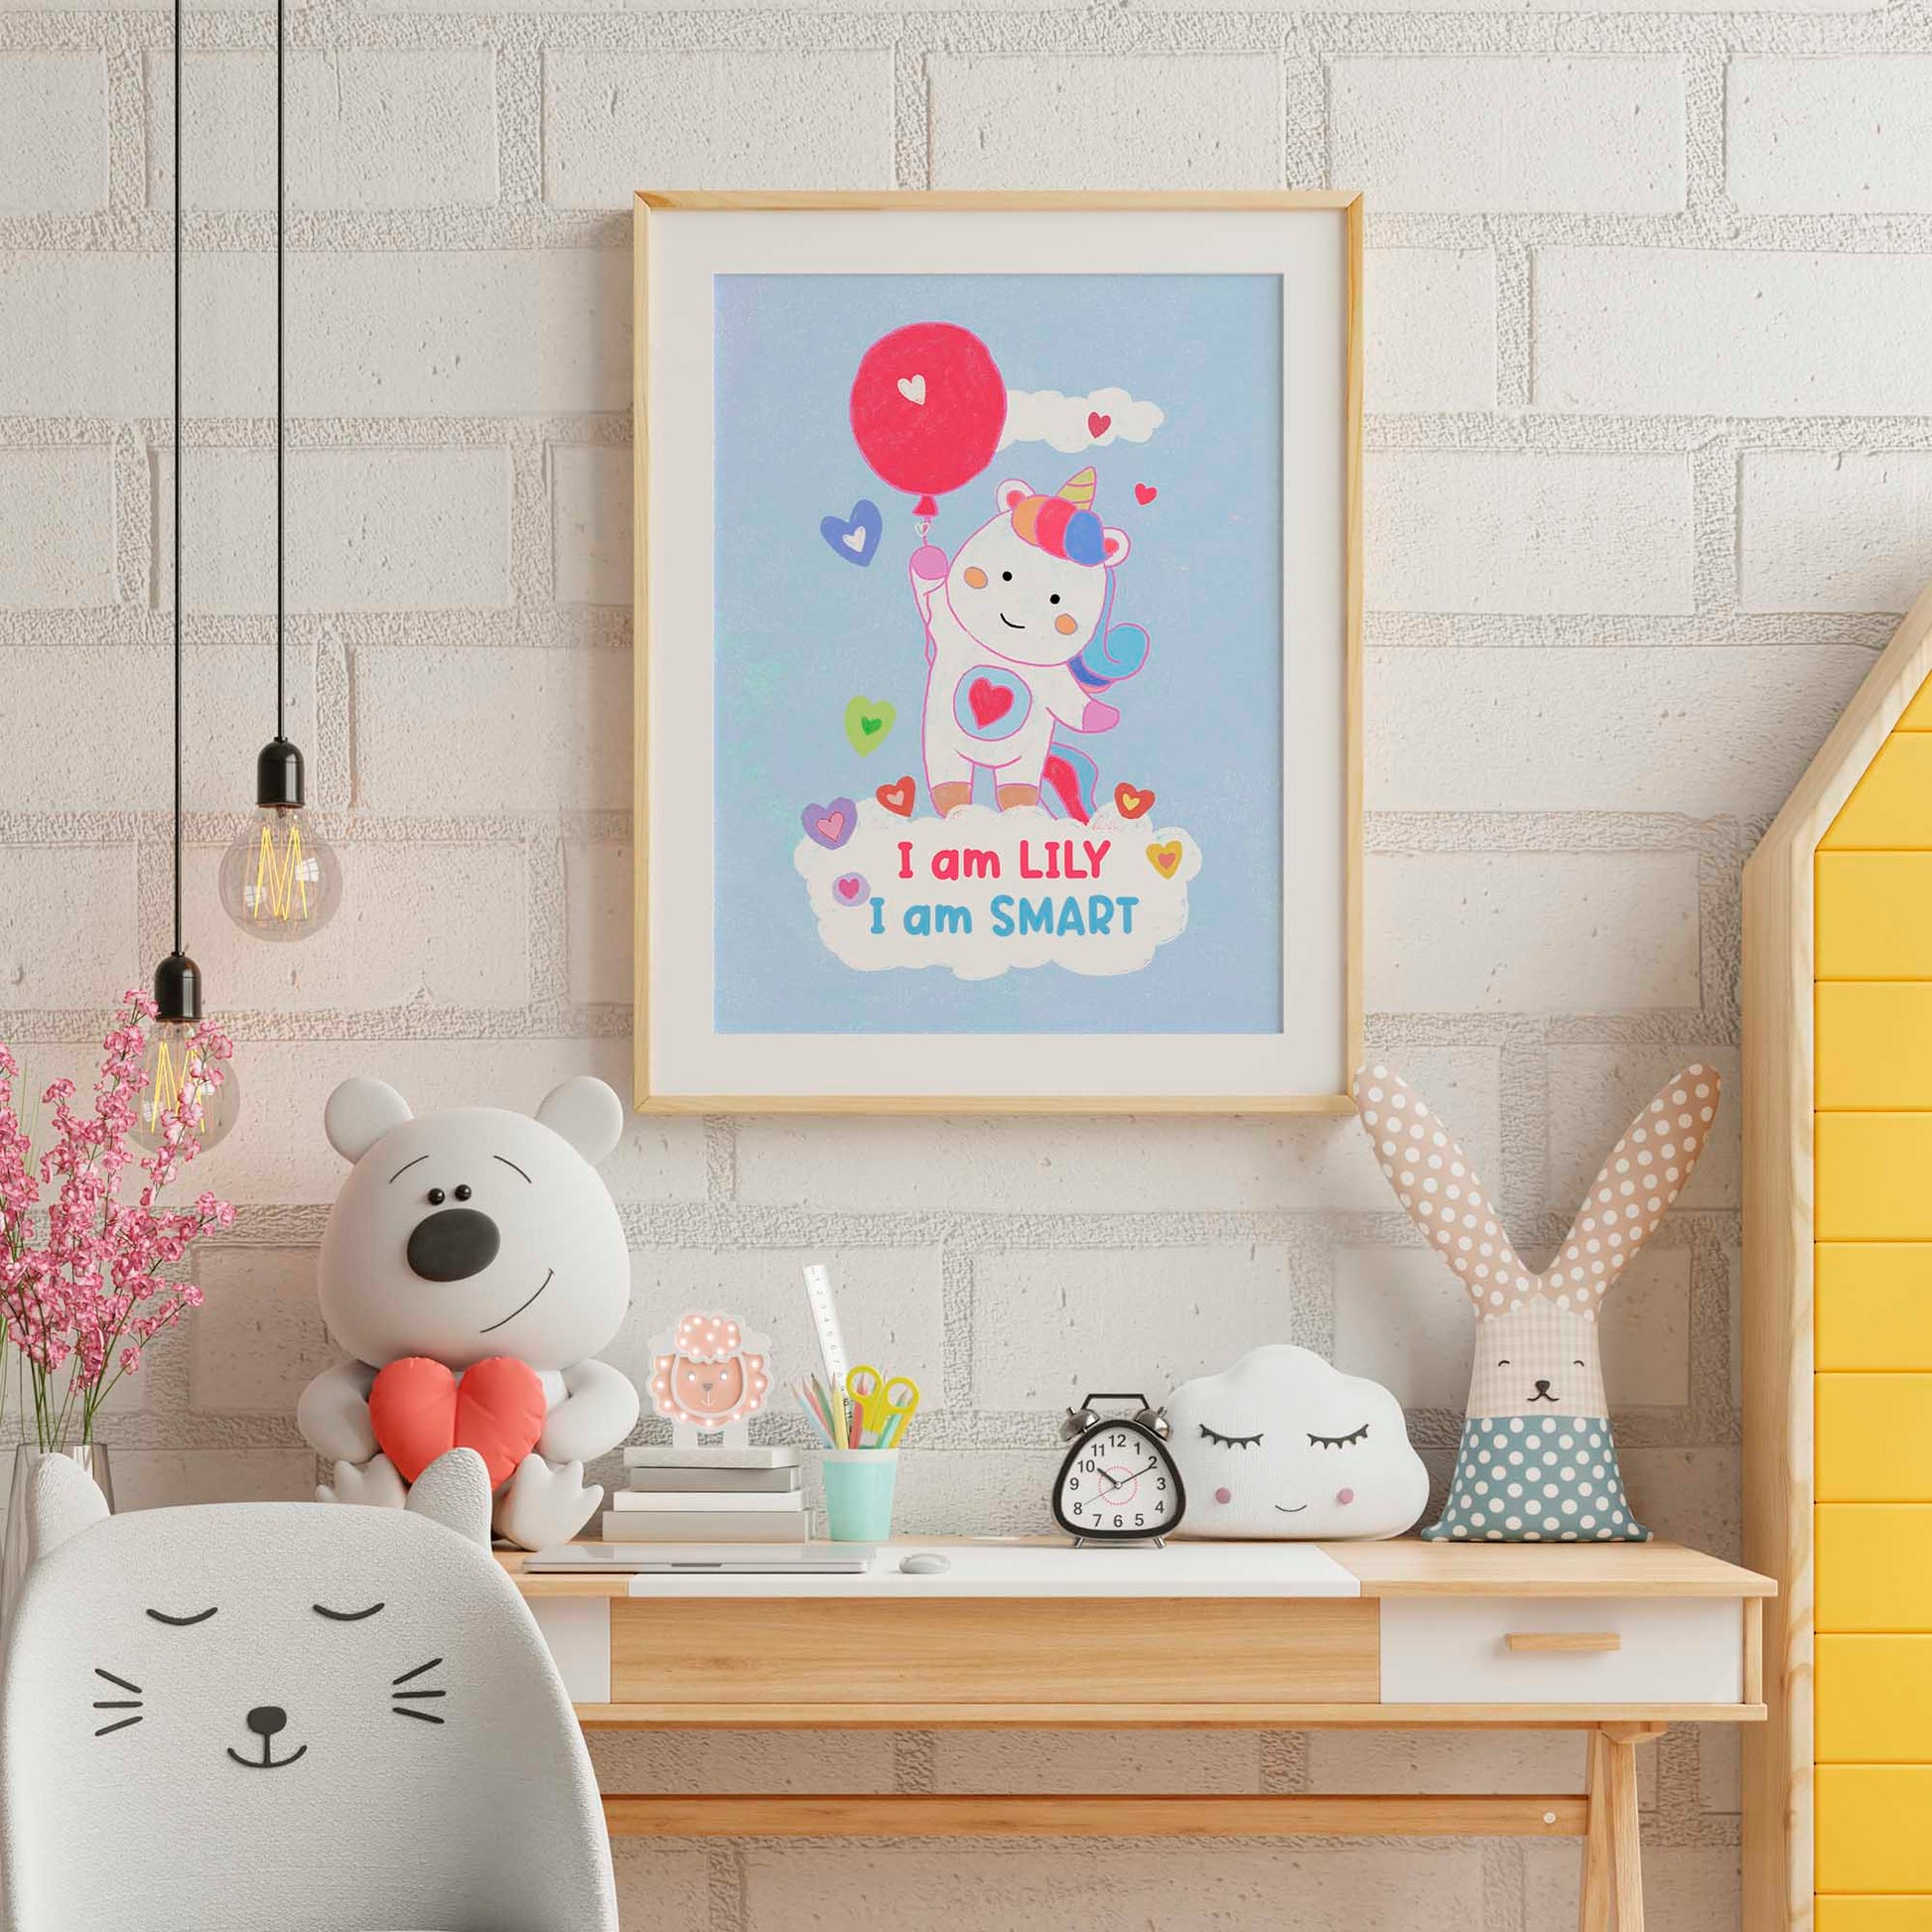 Delightful unicorn framed art with nurturing phrases, enhancing a girl's nursery.